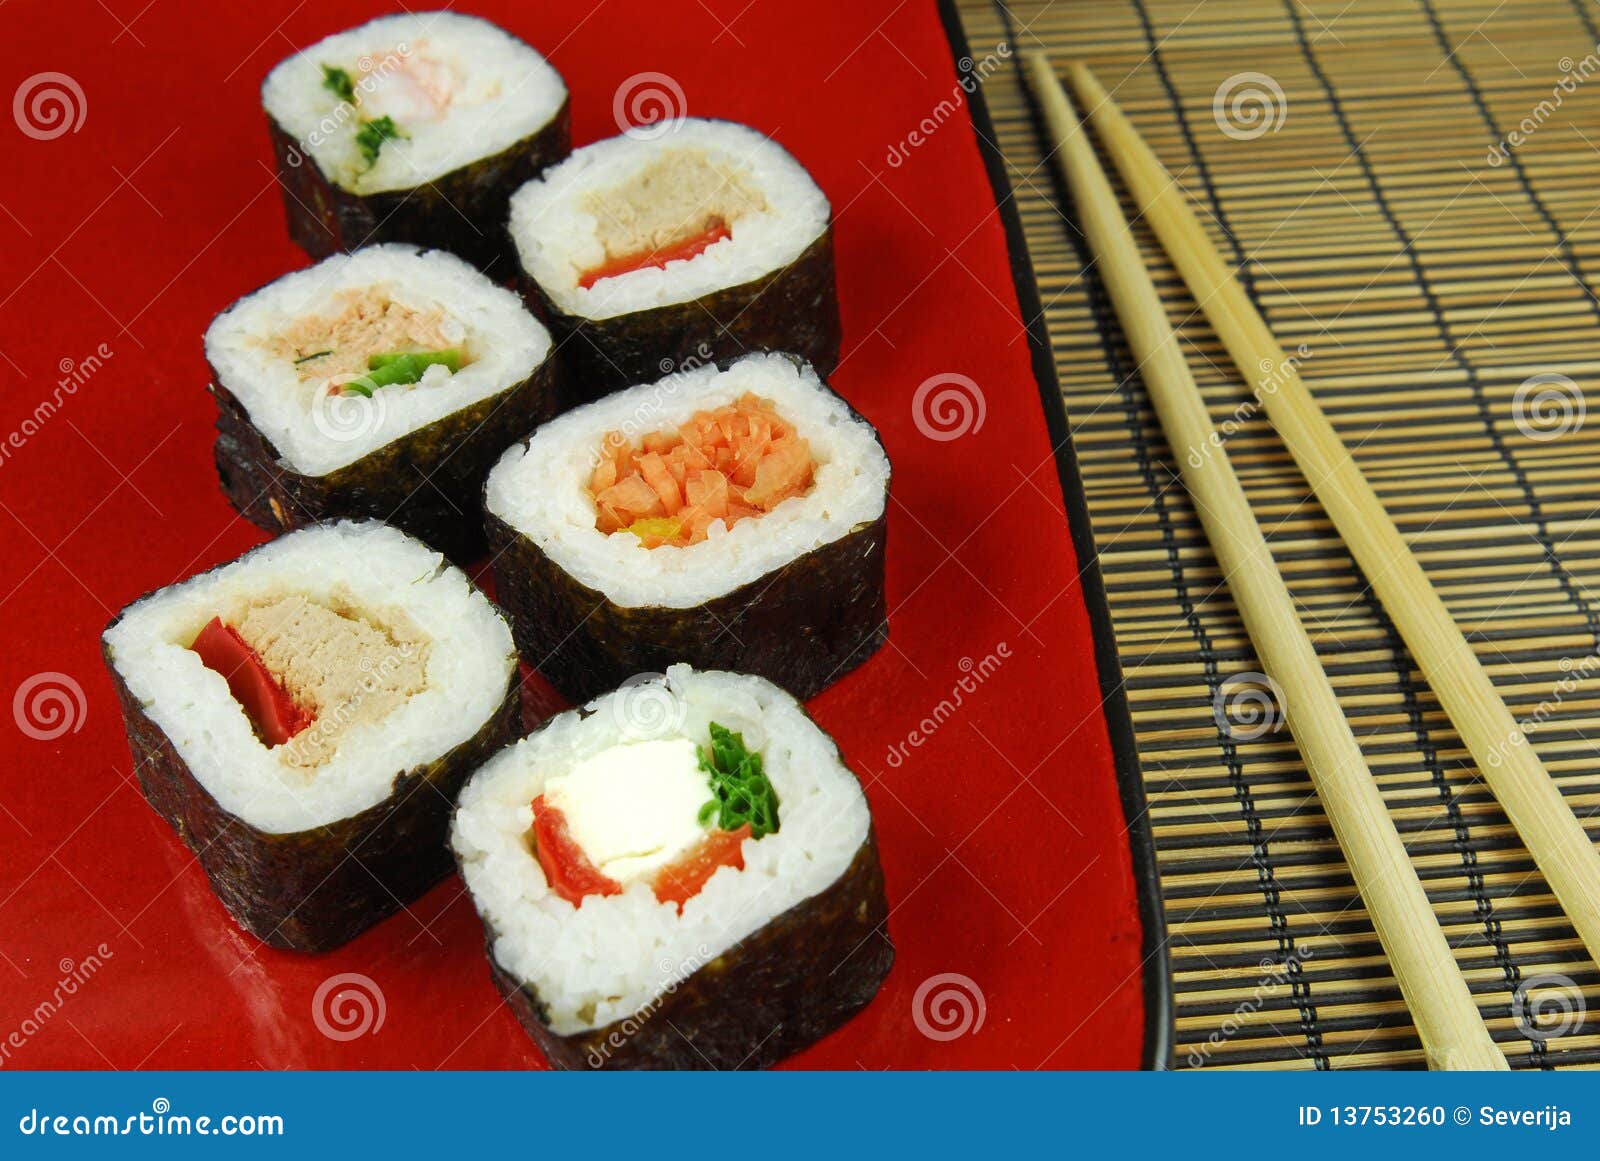 https://thumbs.dreamstime.com/z/sushi-futomaki-chopsticks-13753260.jpg